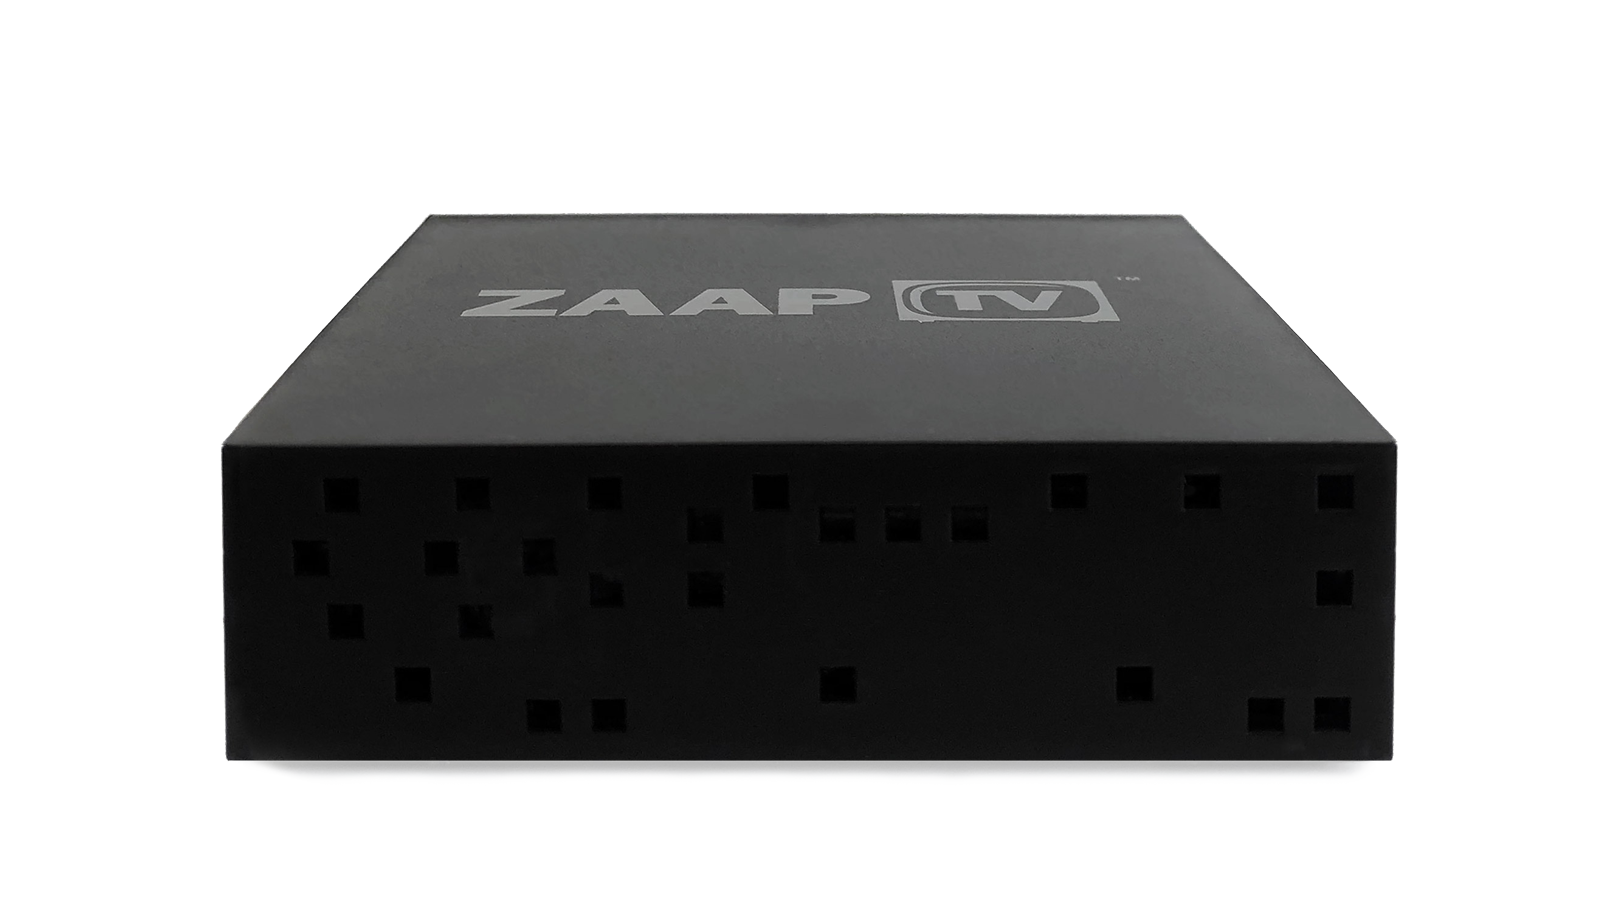 ZaapTV HD709N